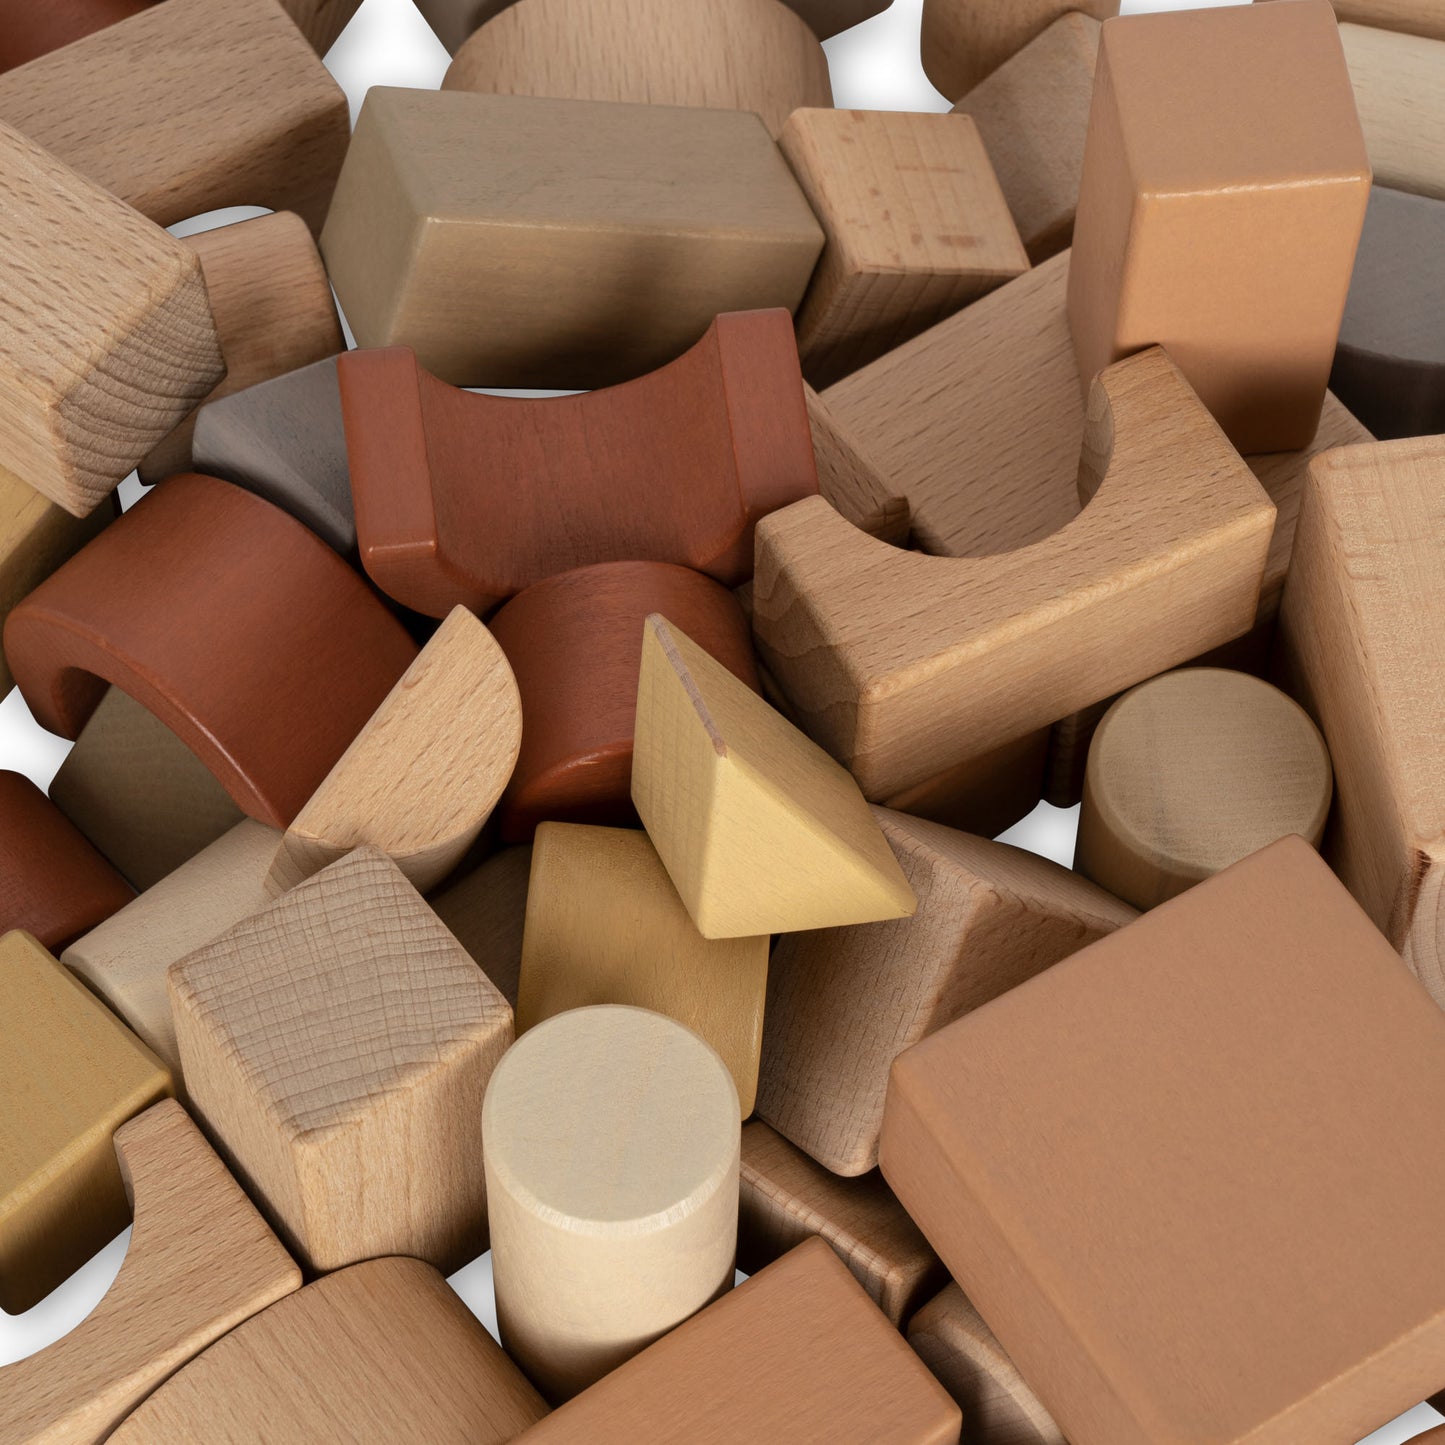 Wooden blocks - Multi